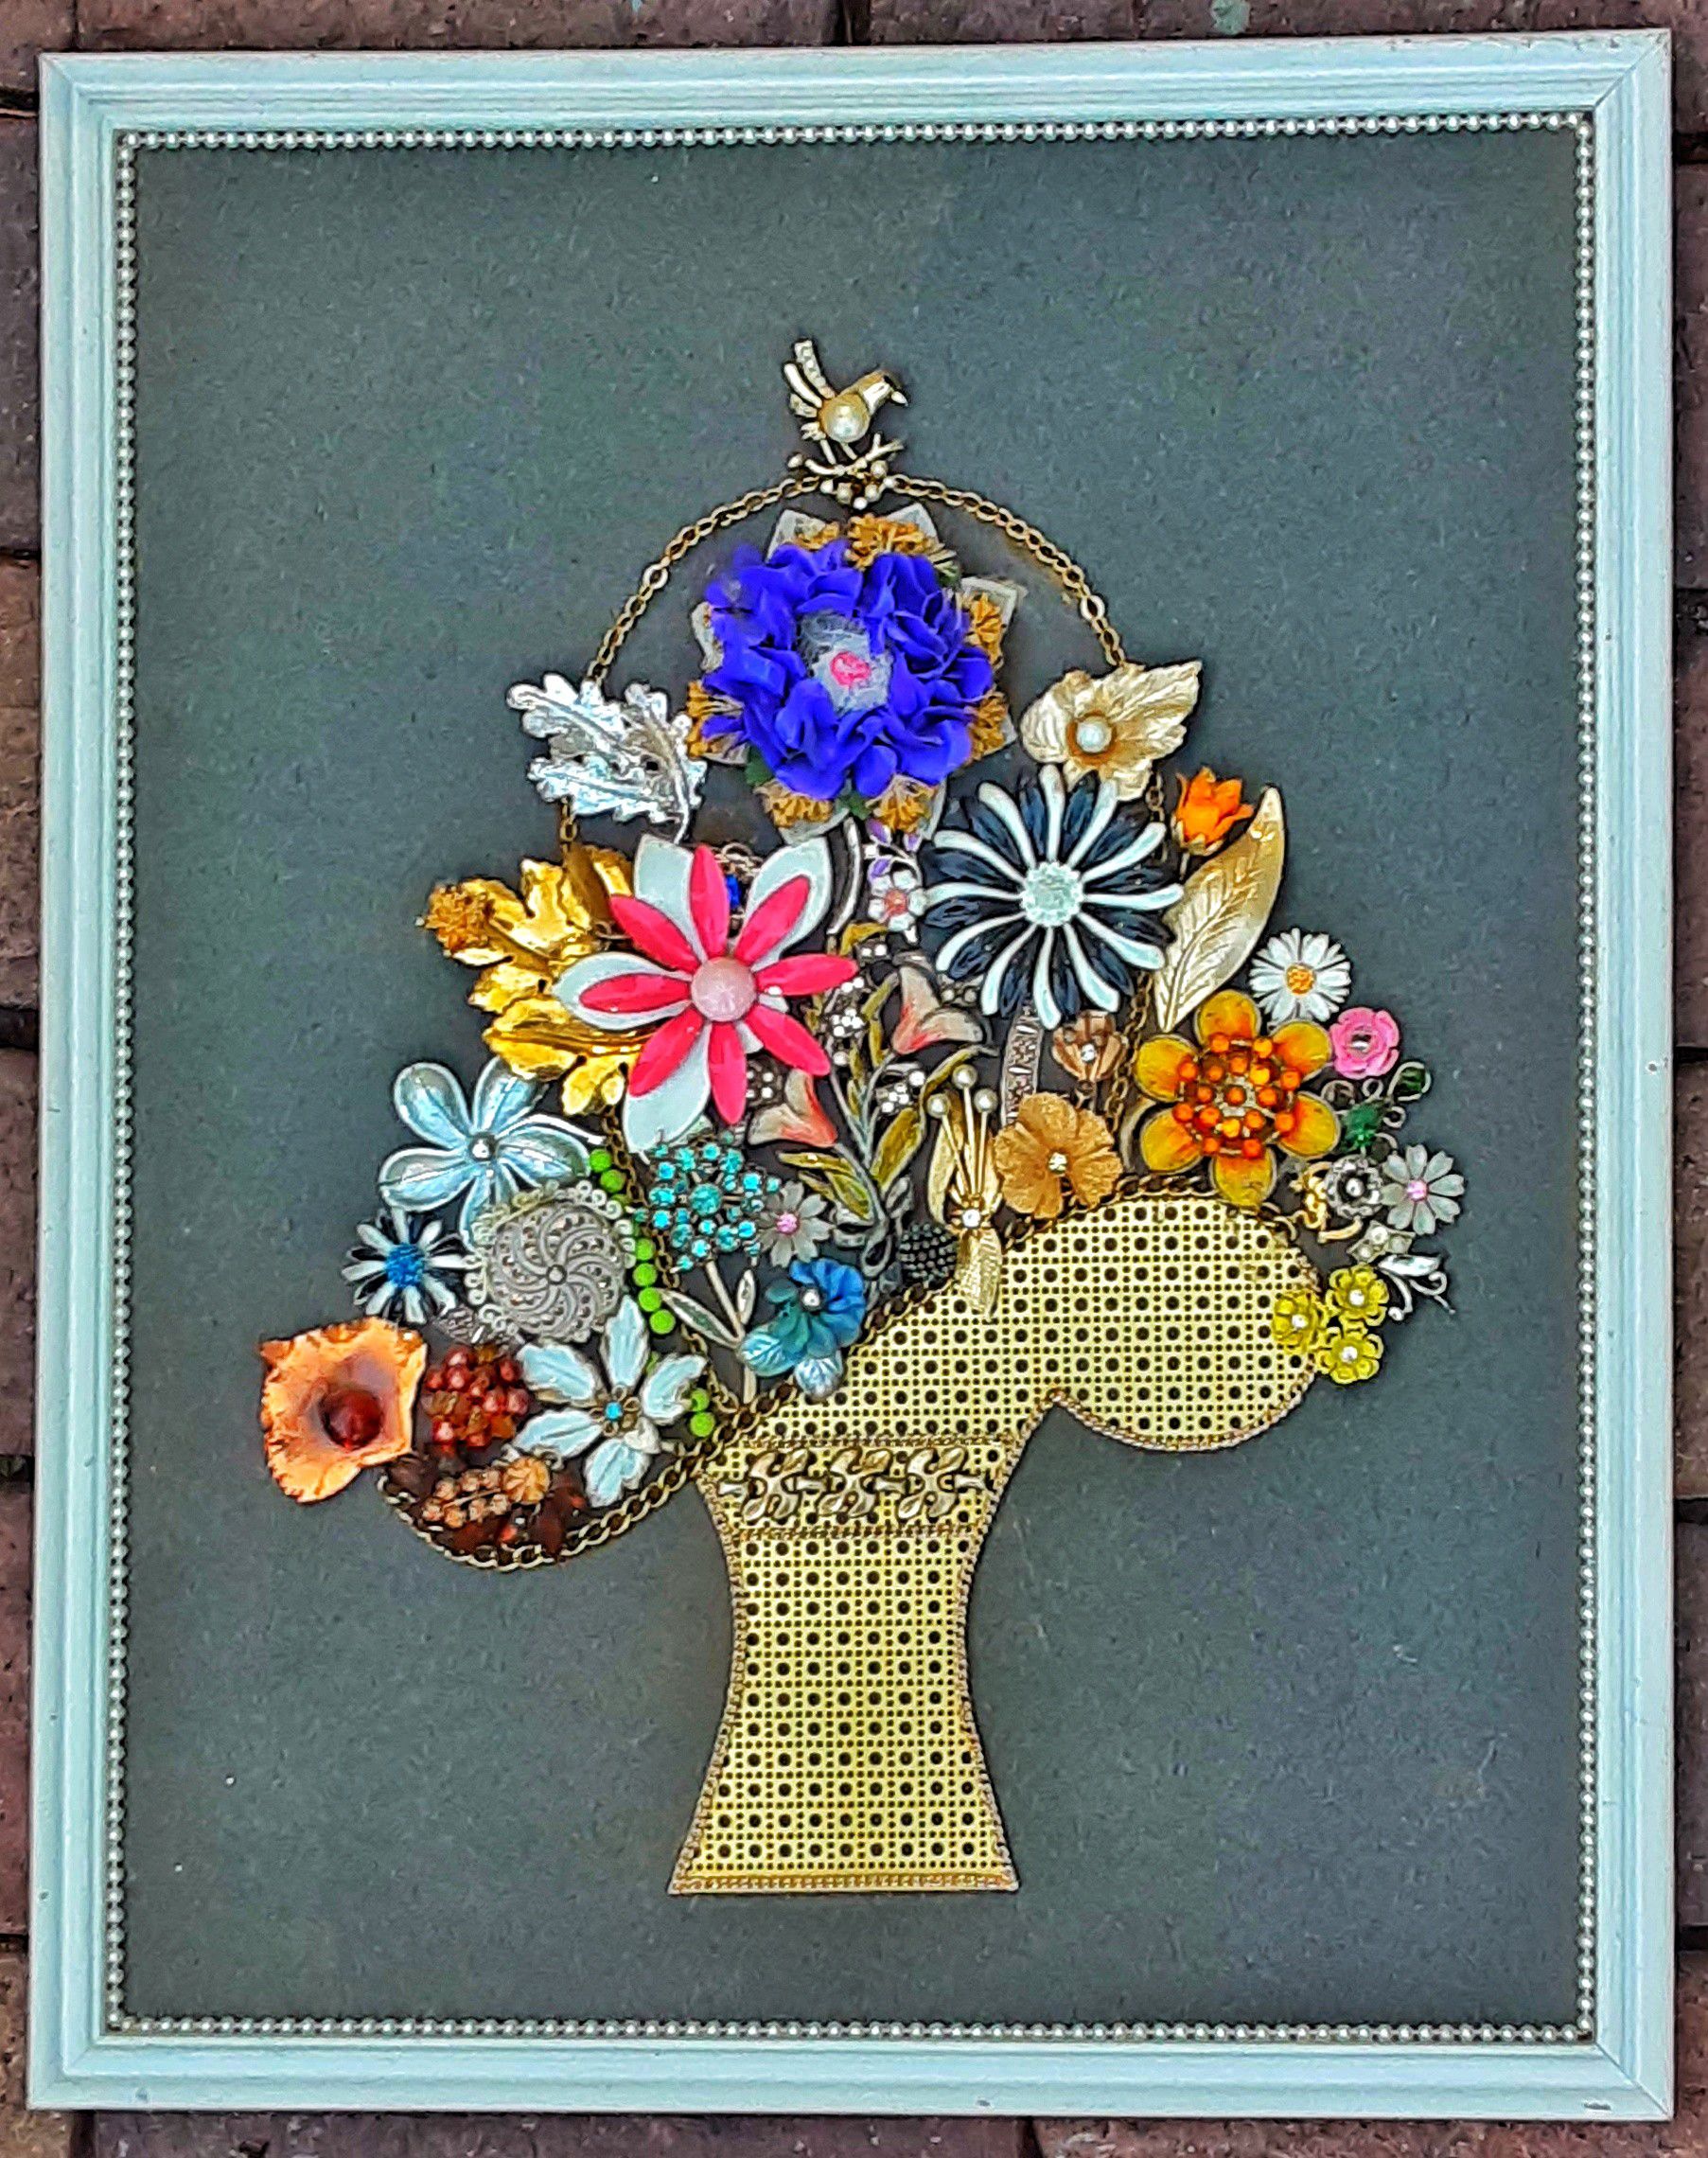 Vintage folk art jewelry picture of flower basket from repurposed jewelry ca. 1982 ! Jewelry art !